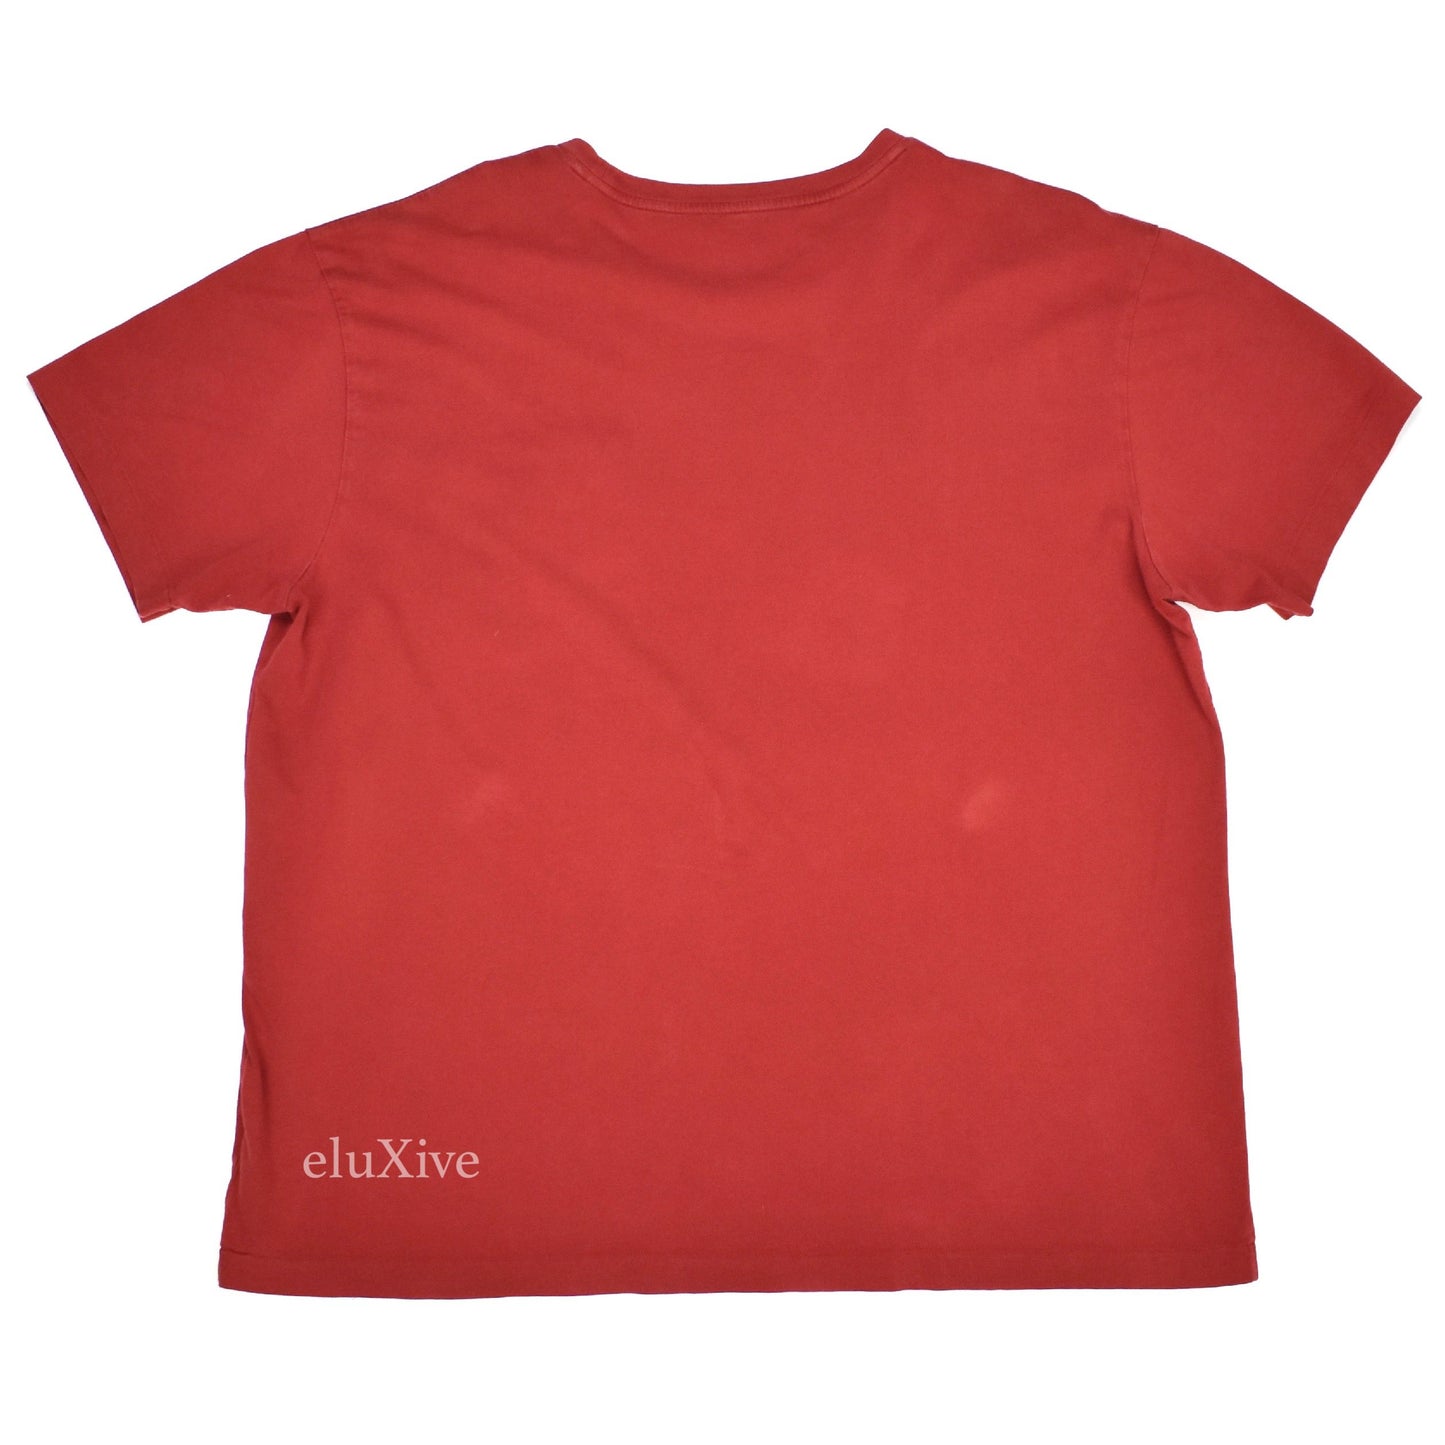 Polo Ralph Lauren - Misplaced Pockets Logo T-Shirt (Red)